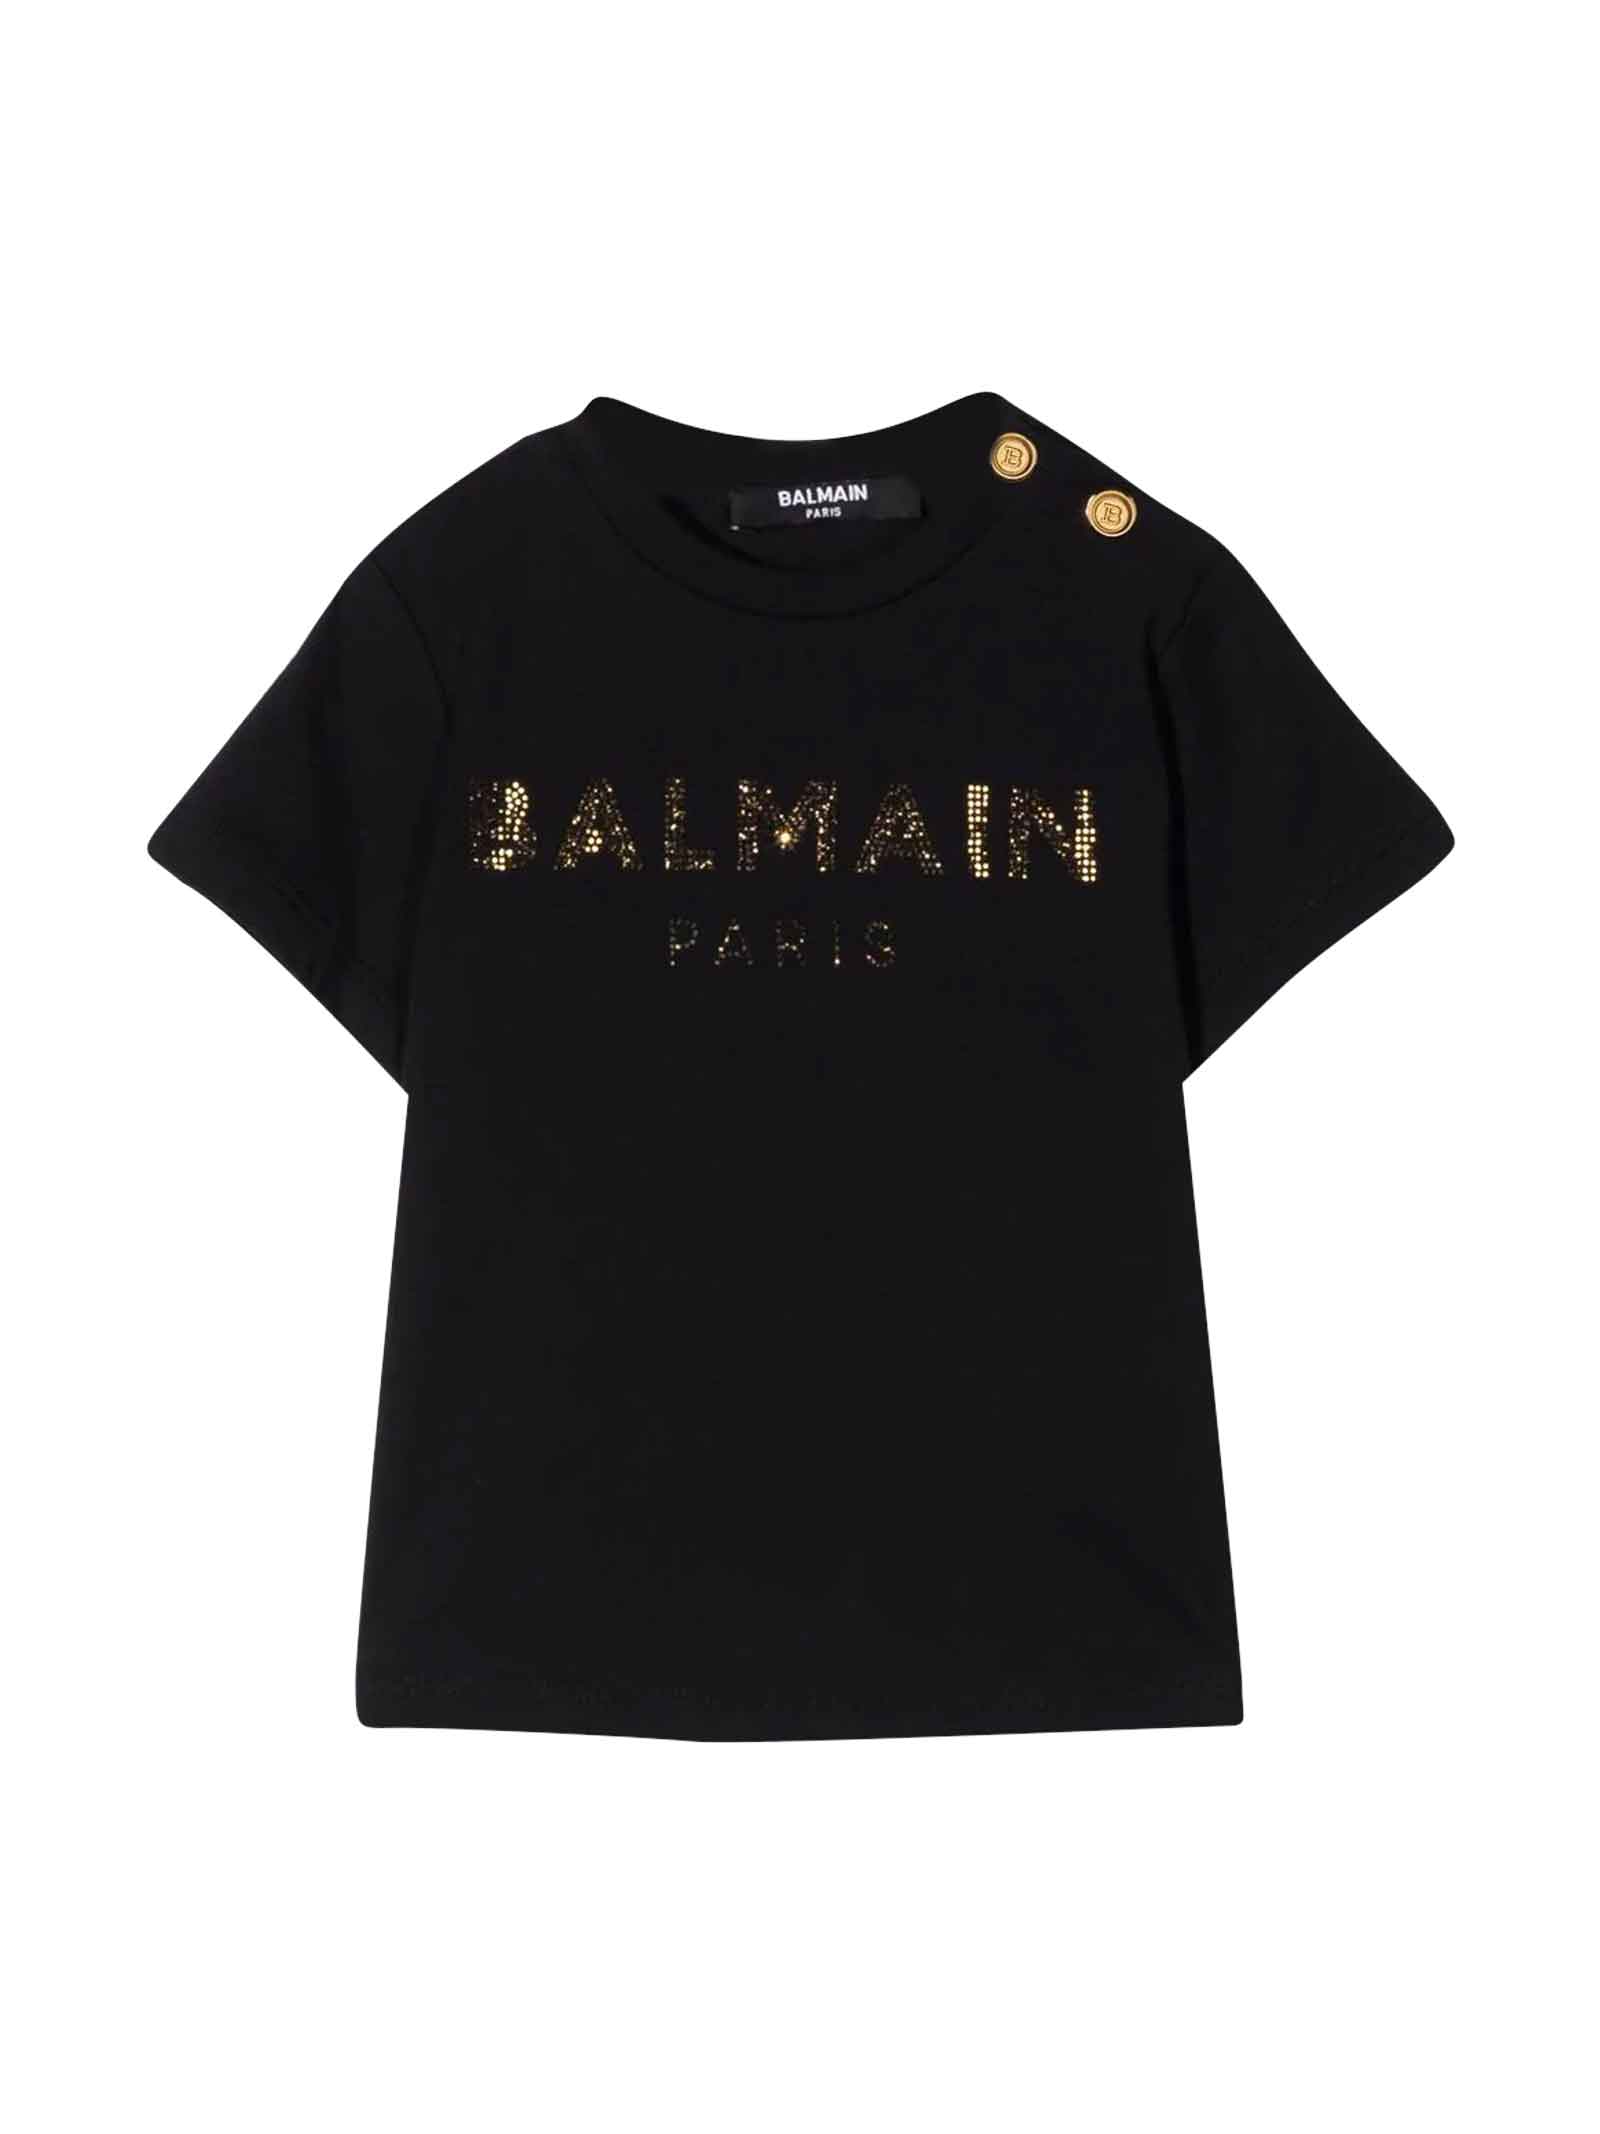 Balmain Black Baby T-shirt With Gold Print